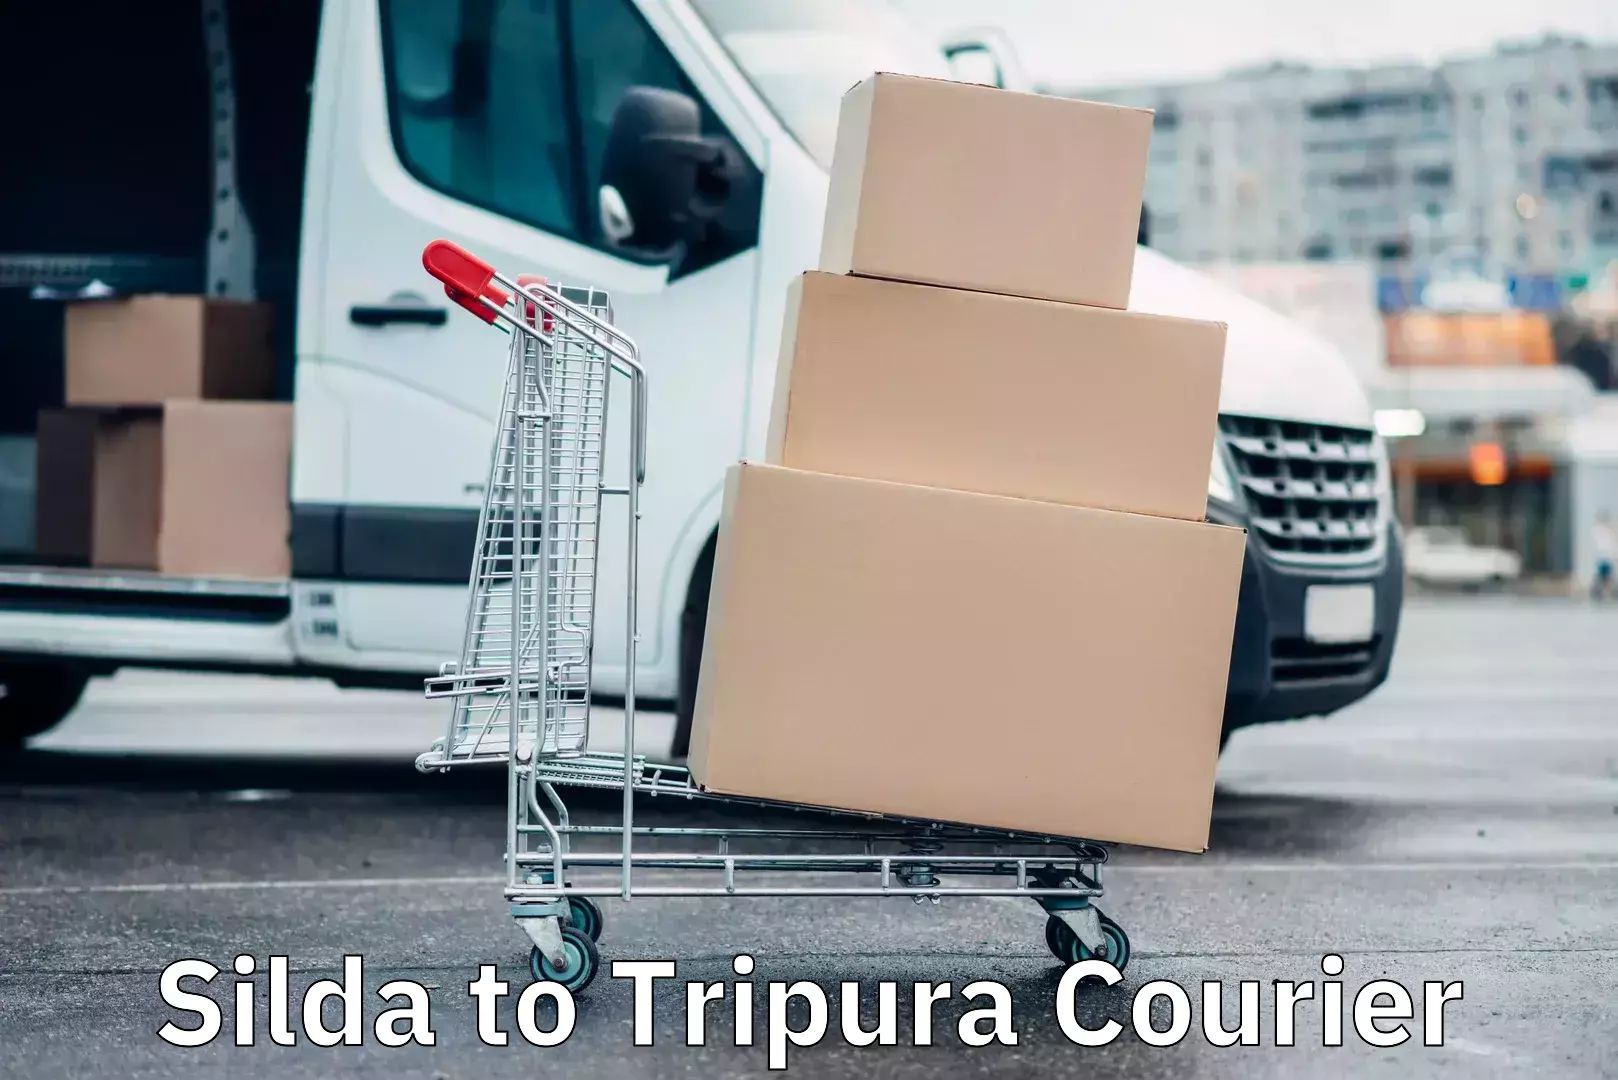 Reliable logistics providers Silda to Tripura